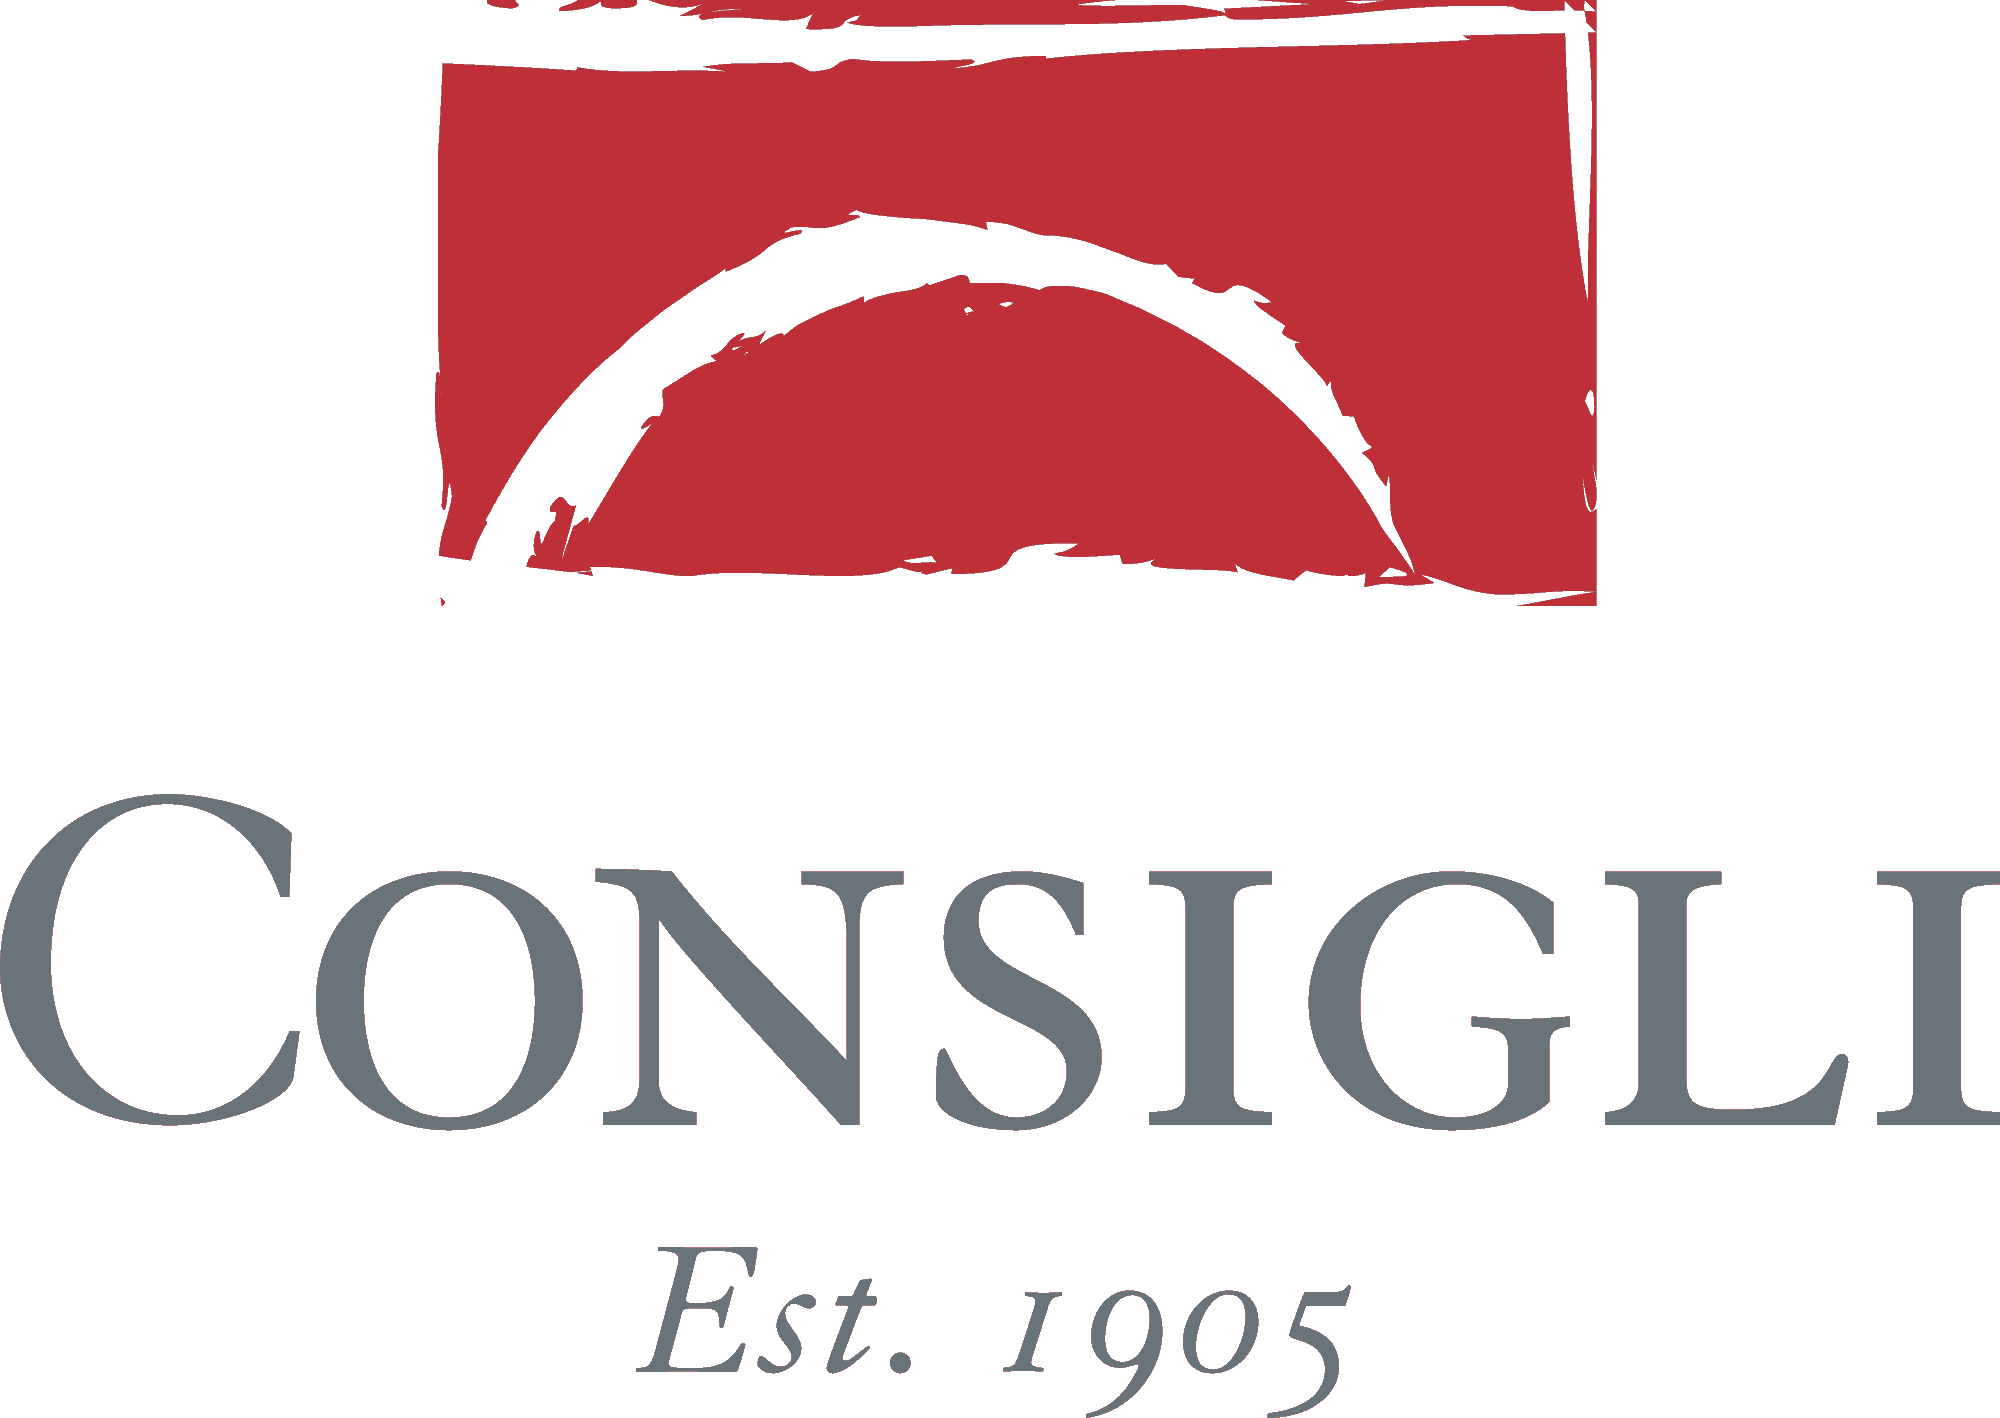 Consigli Construction Co., Inc. 